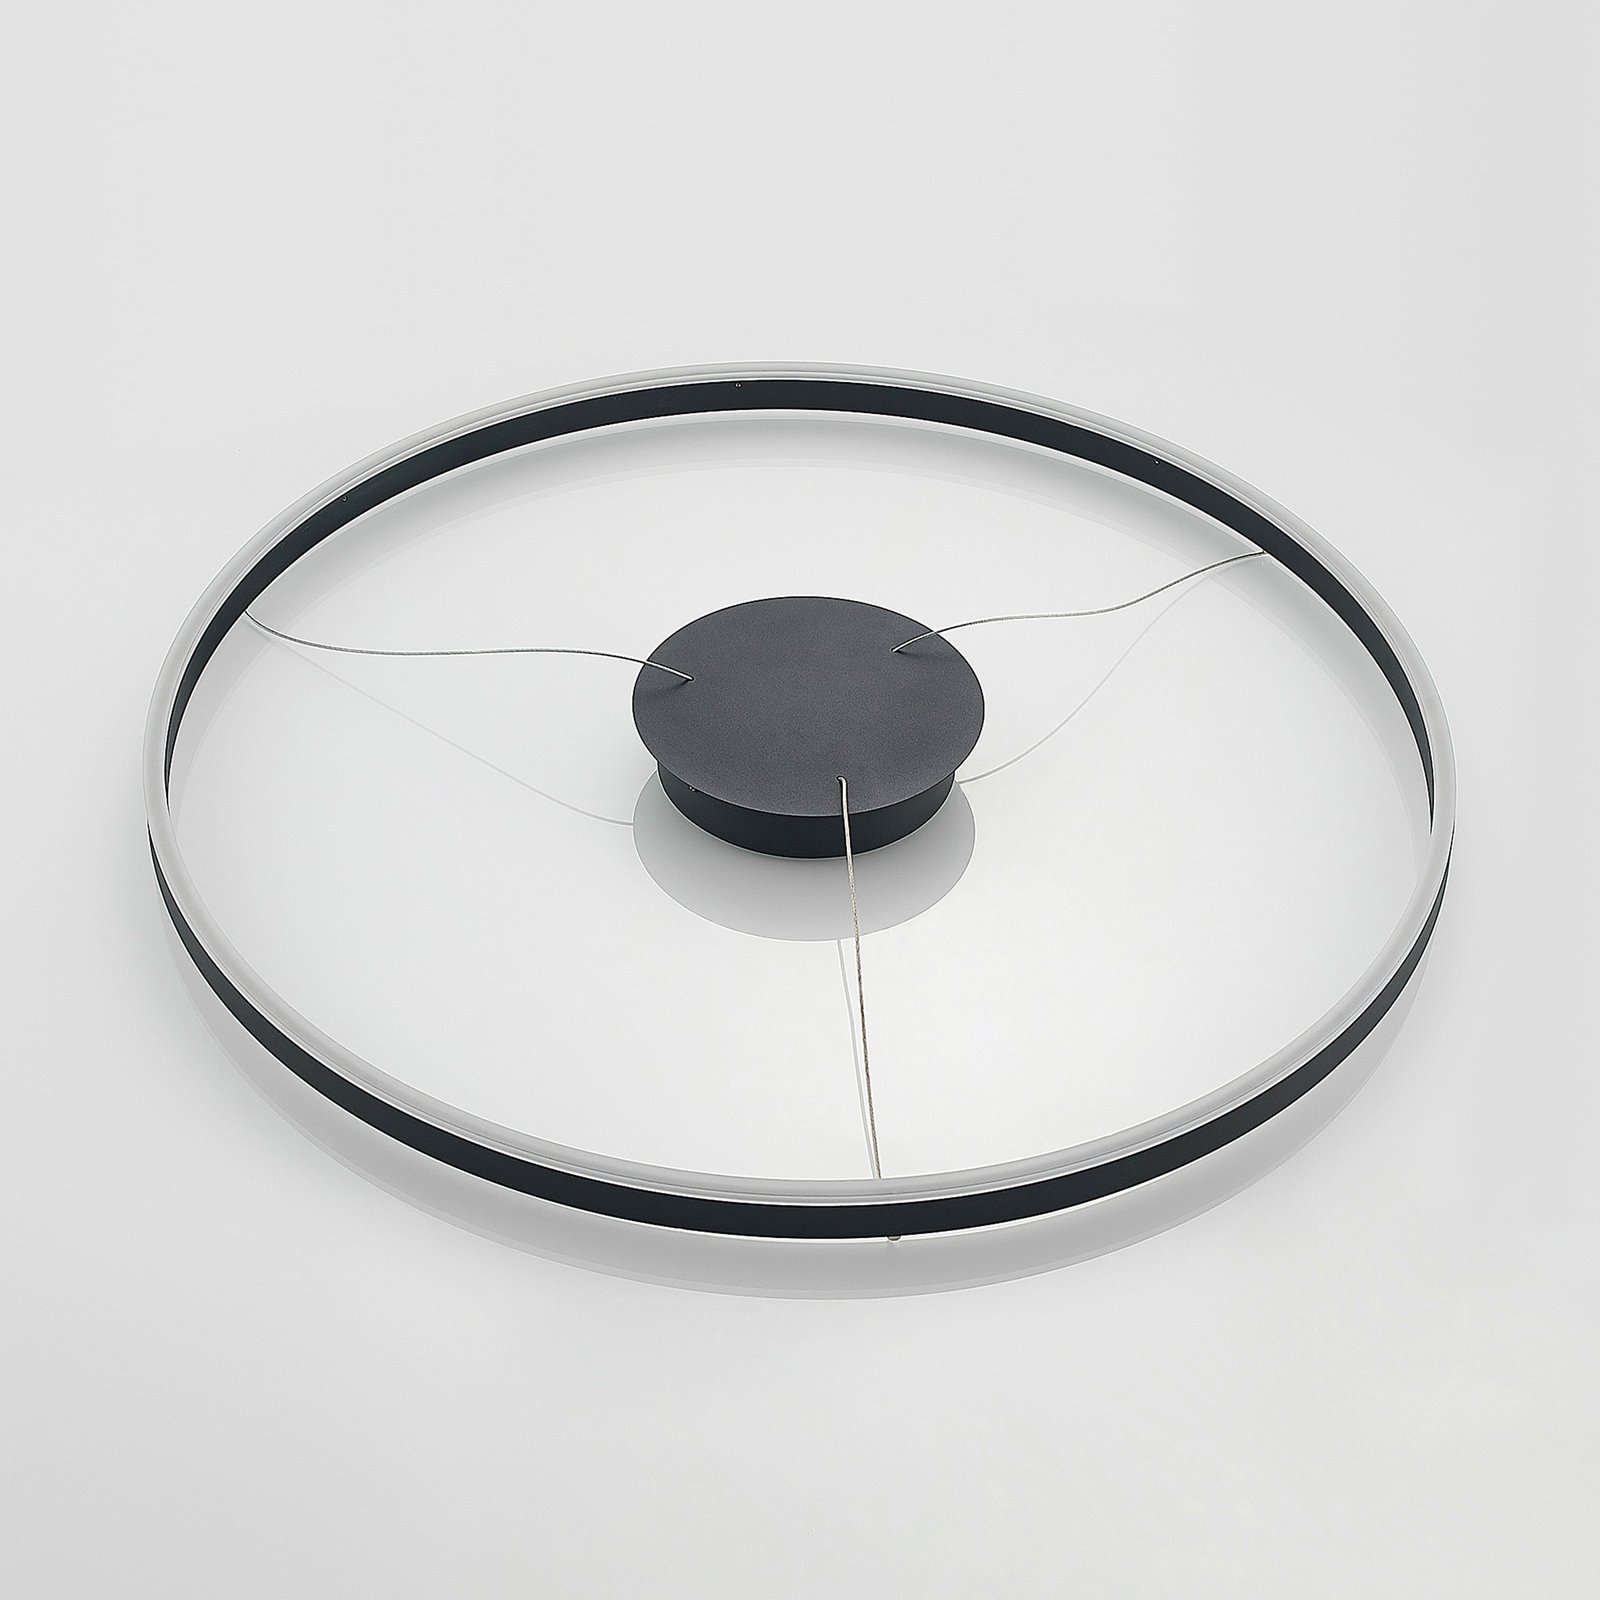 Arcchio Albiona LED hanglamp, 1 ring, 80 cm